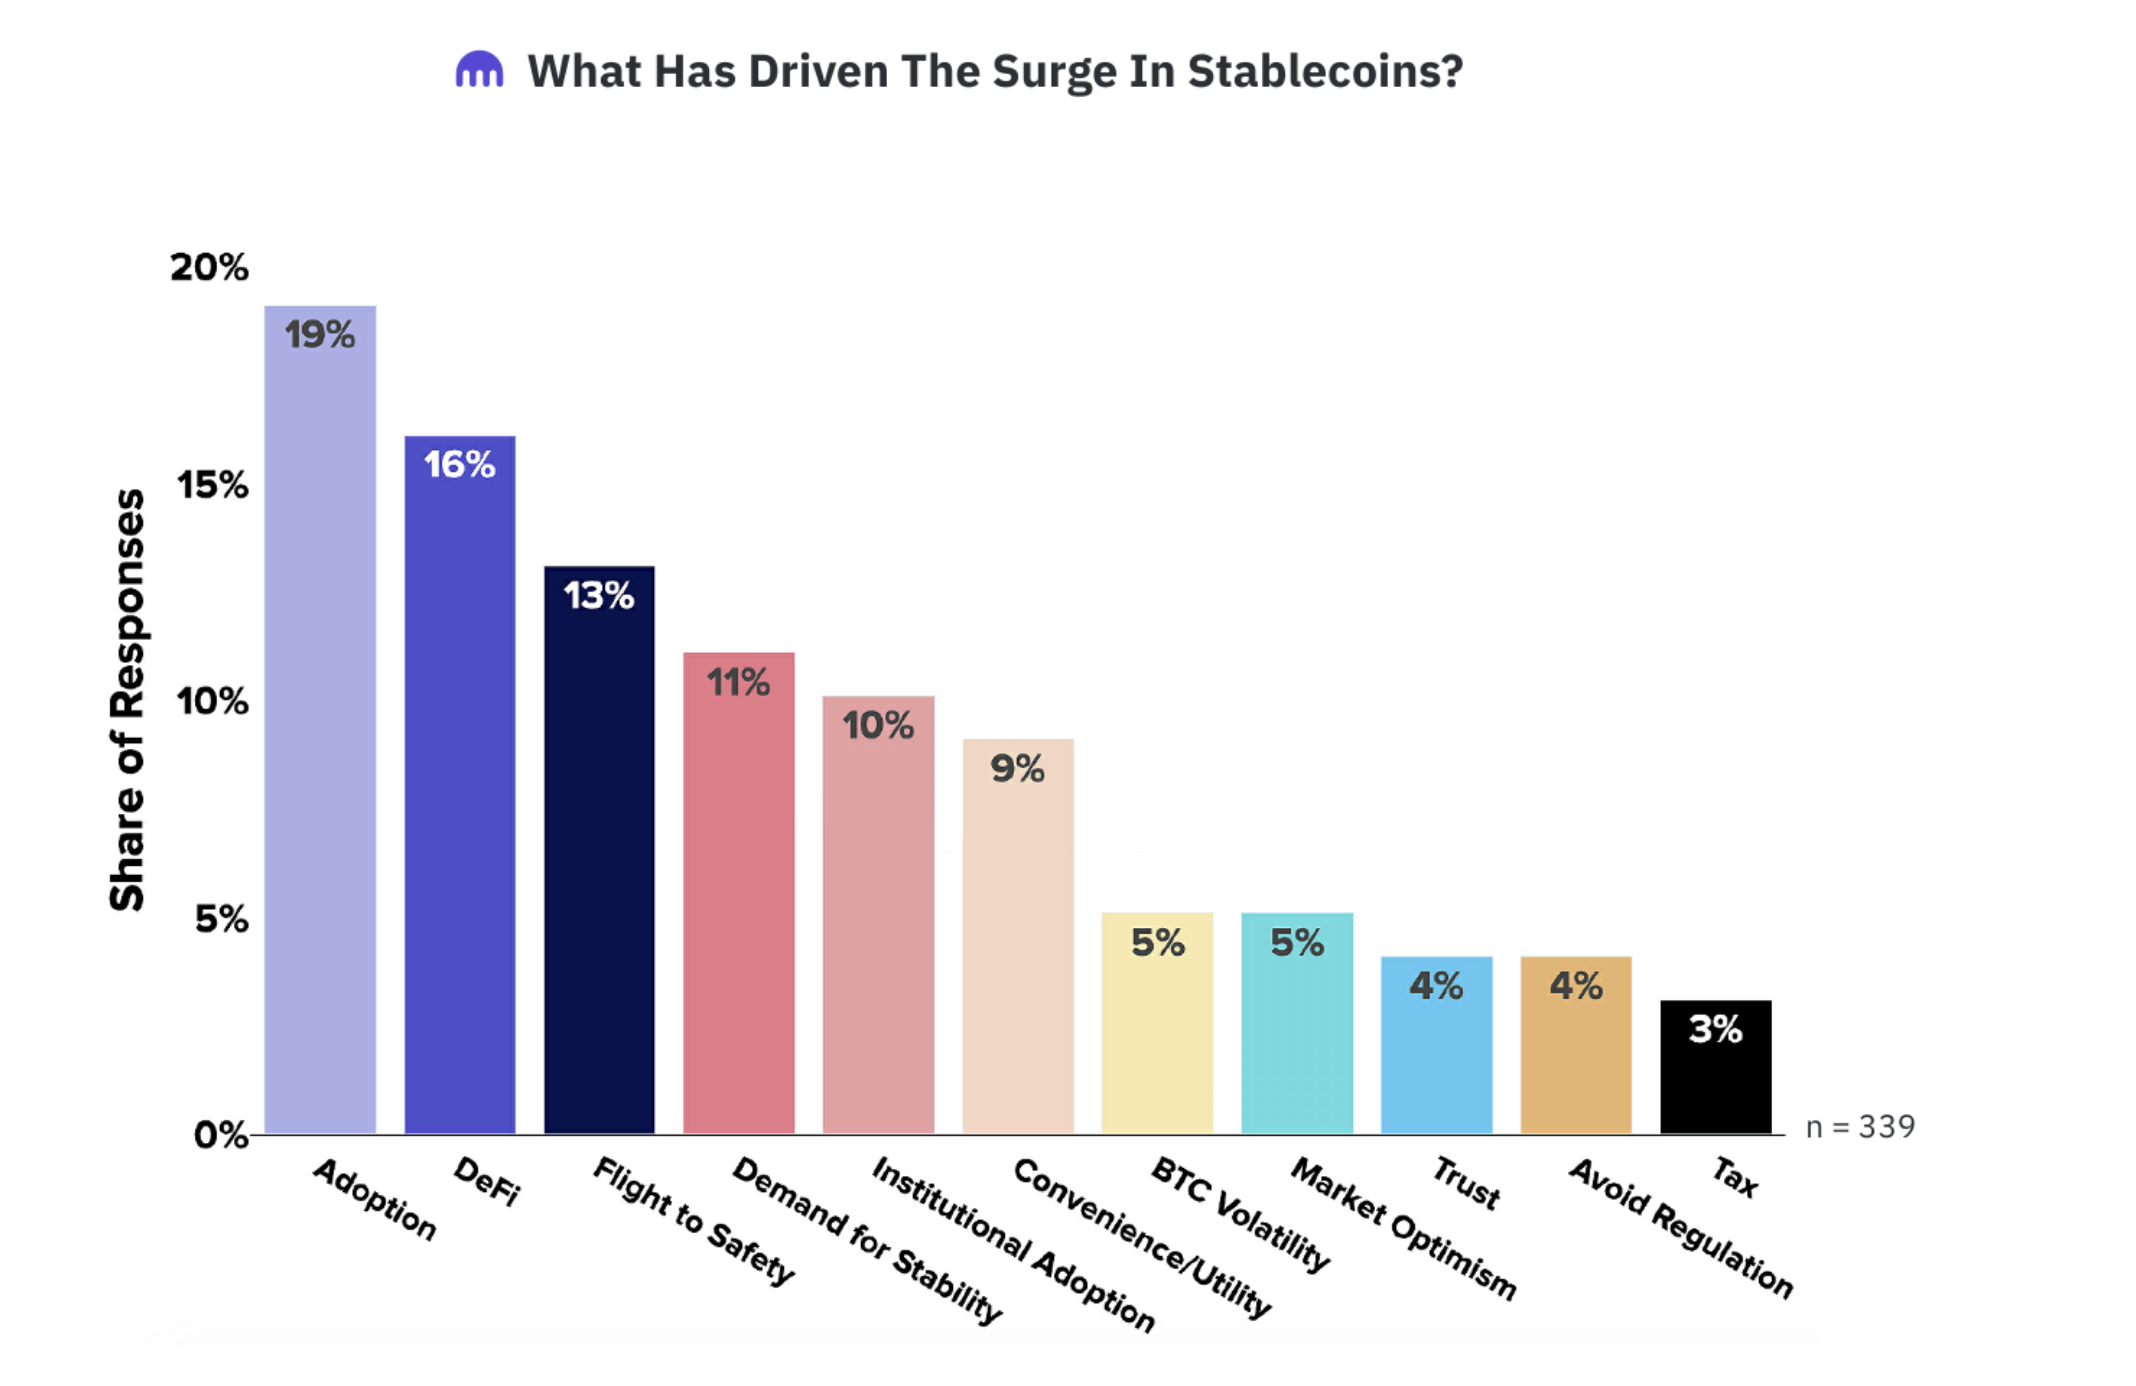 Stablecoin adoption Kraken survey, Dec 2020